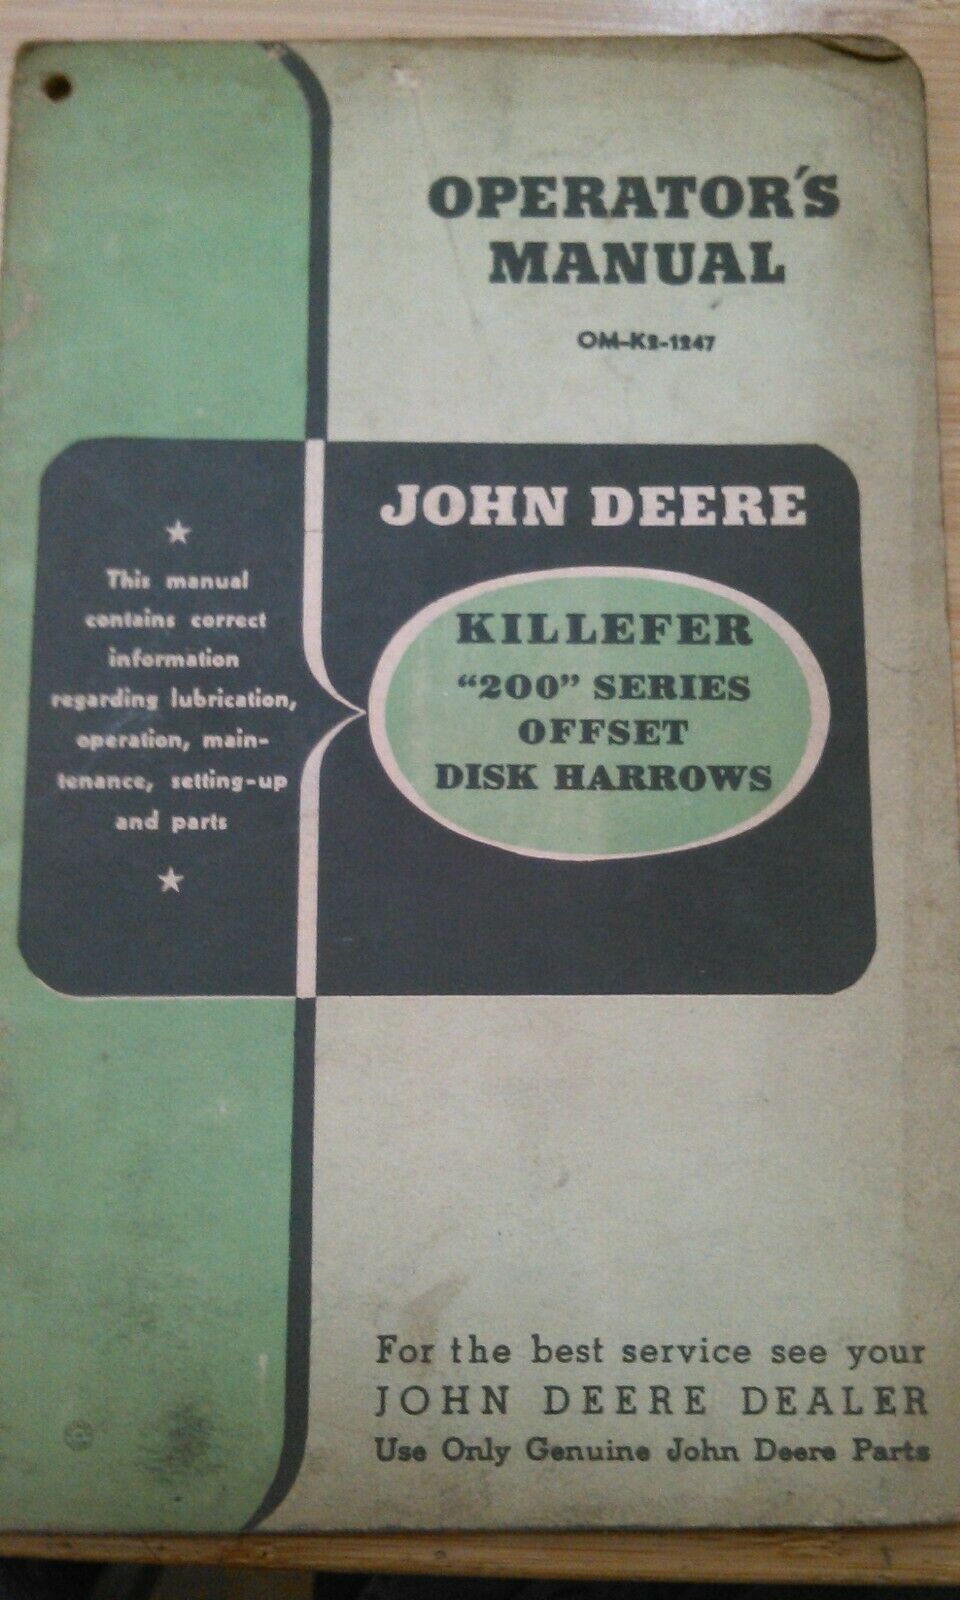 Primary image for JOHN DEERE OM-K2-1247 OPERATOR'S MANUAL, 200 SERIES OFFSET DISK